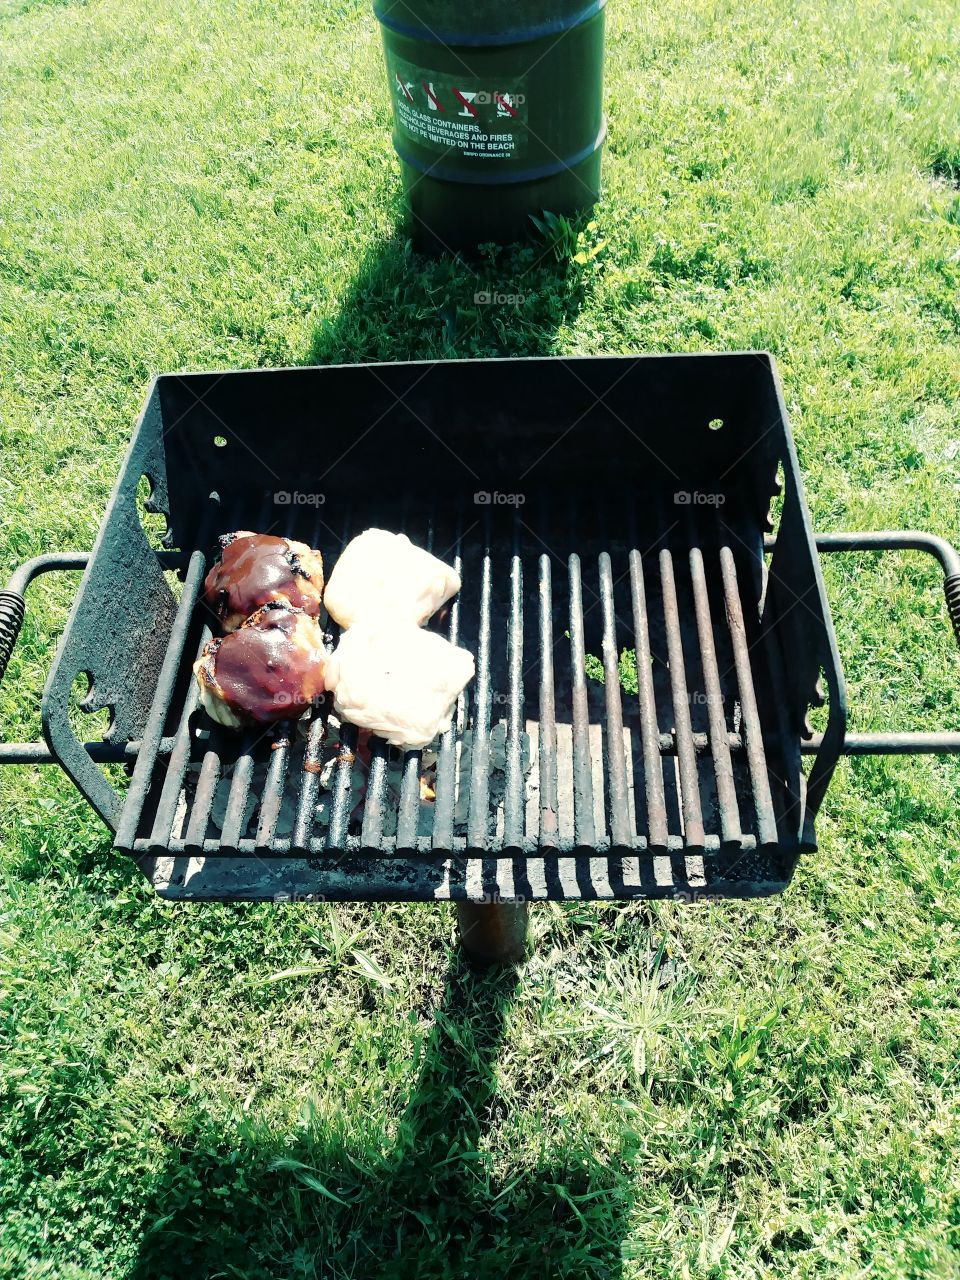 Barbecue chicken